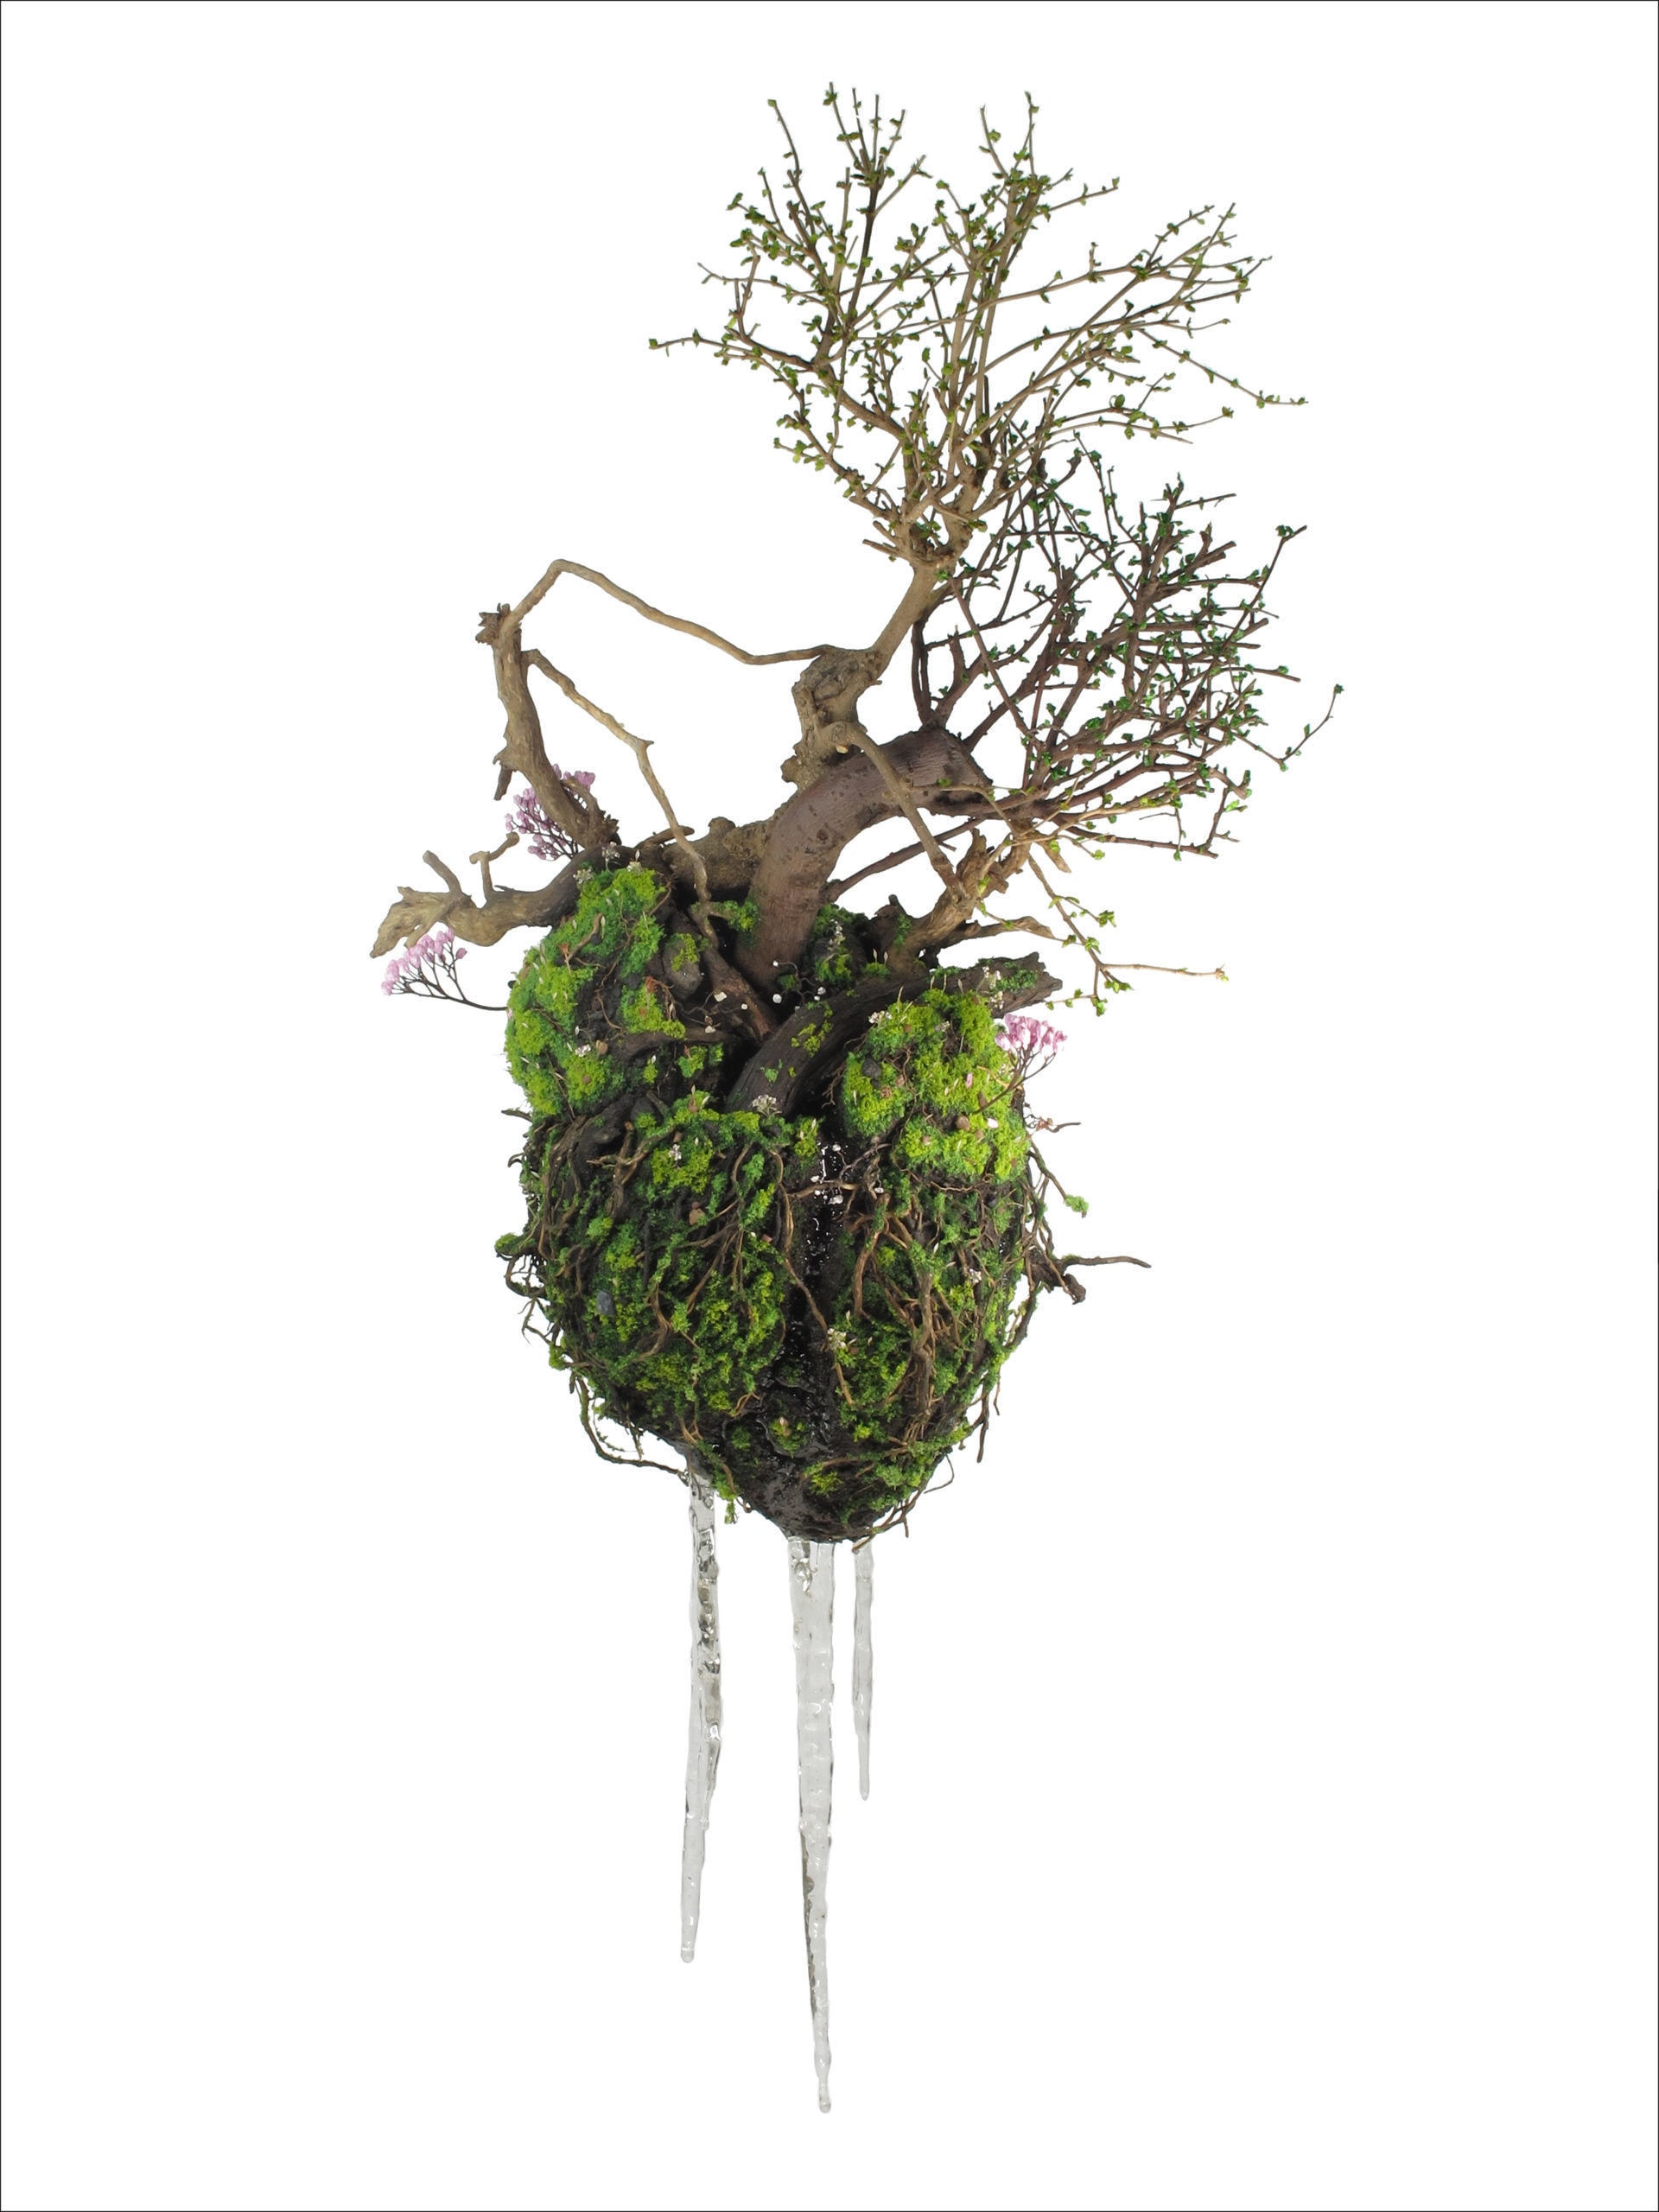 Emeric Chantier, Green Heart, technique mixte, H. 50 x L. 25 x P. 20 cm, 2012, ©A2Z Art Gallery et Emeric Chantier